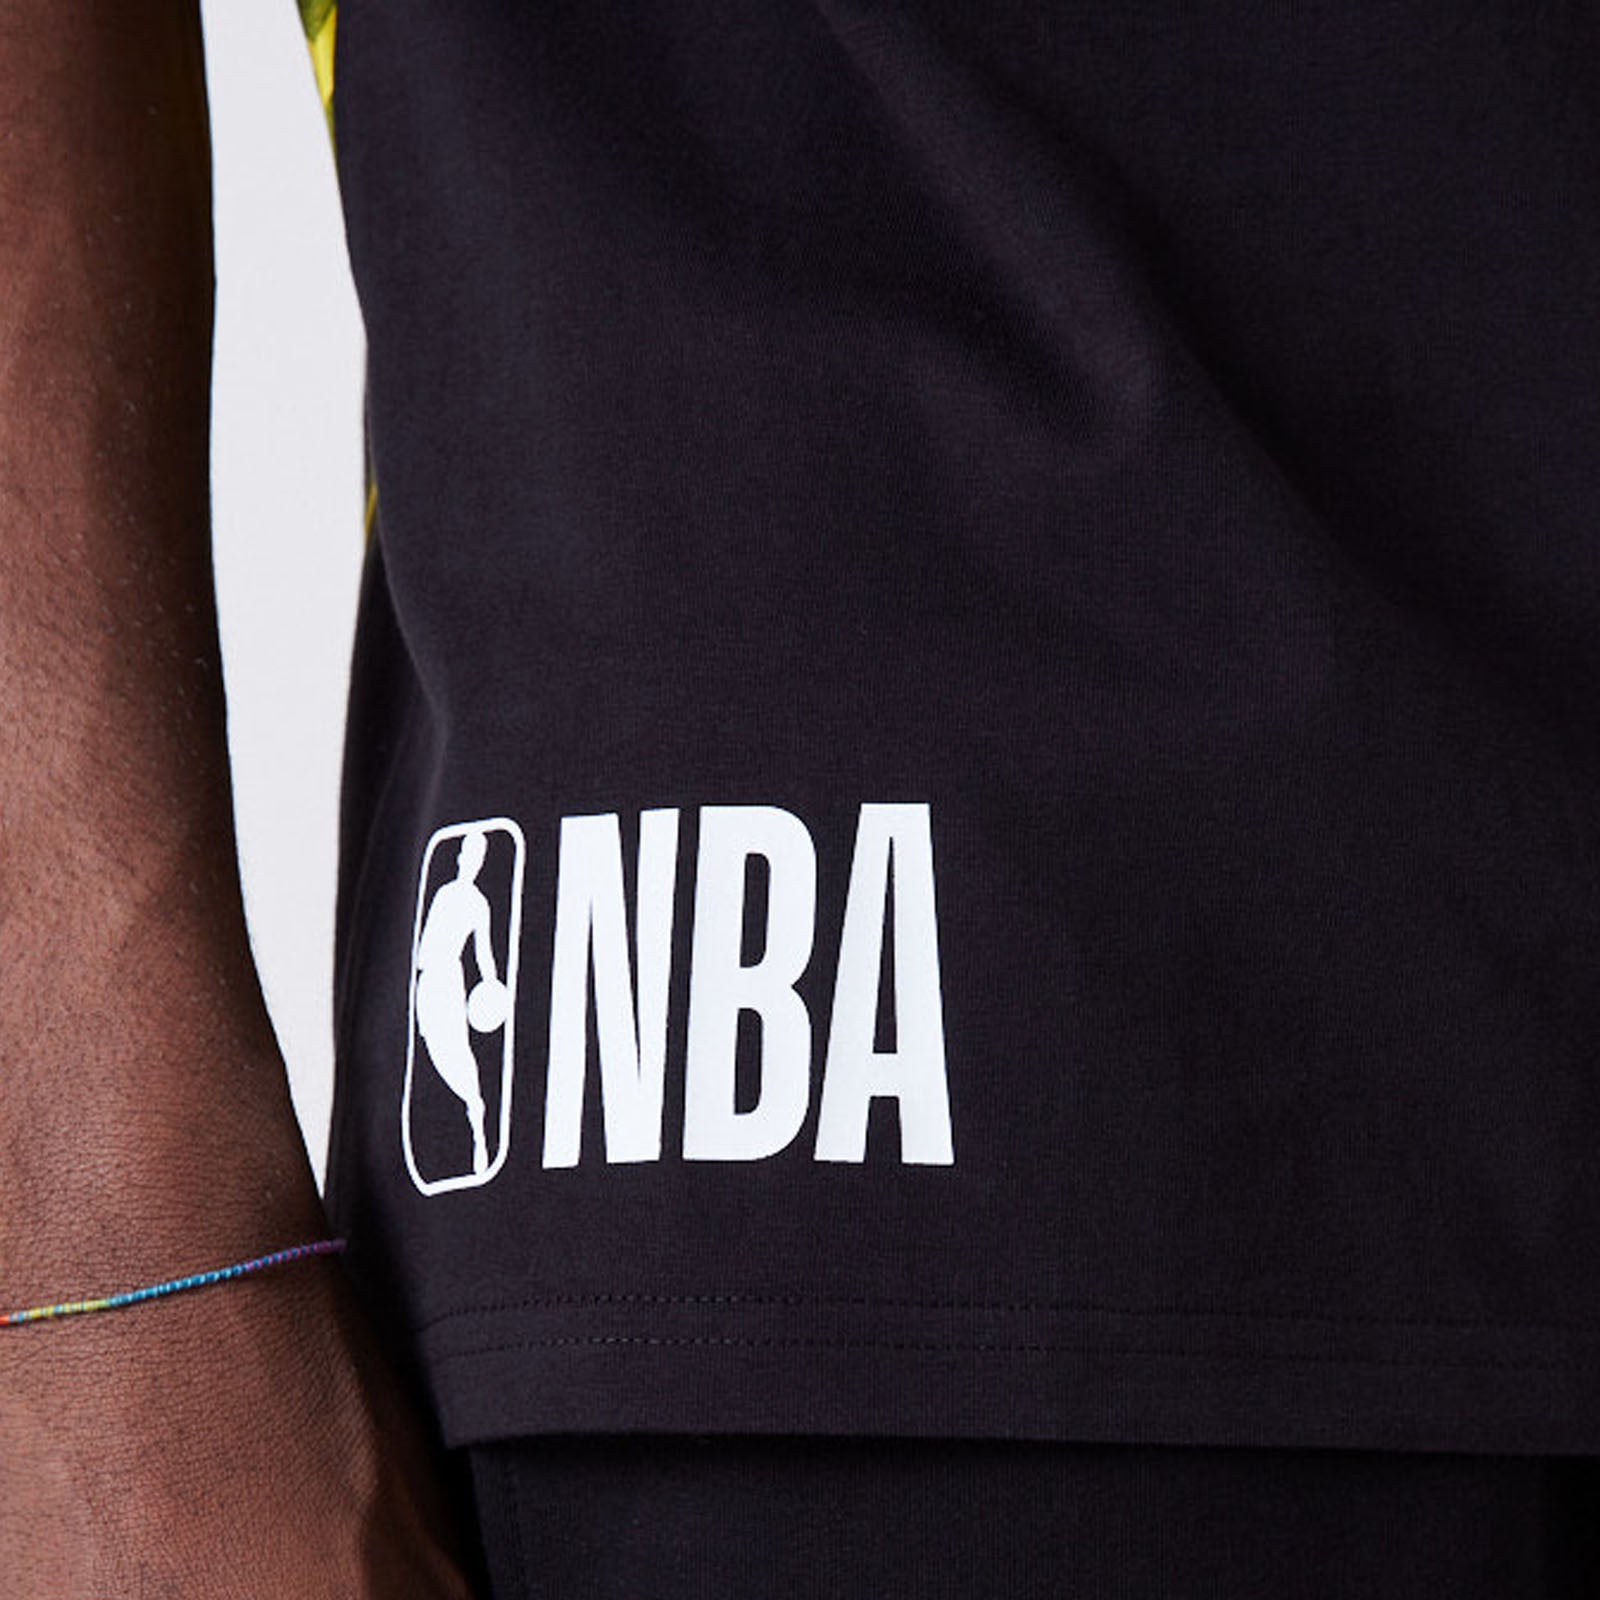 TEAM LOGO LA LAKERS NBA T-SHIRT 'BLACK